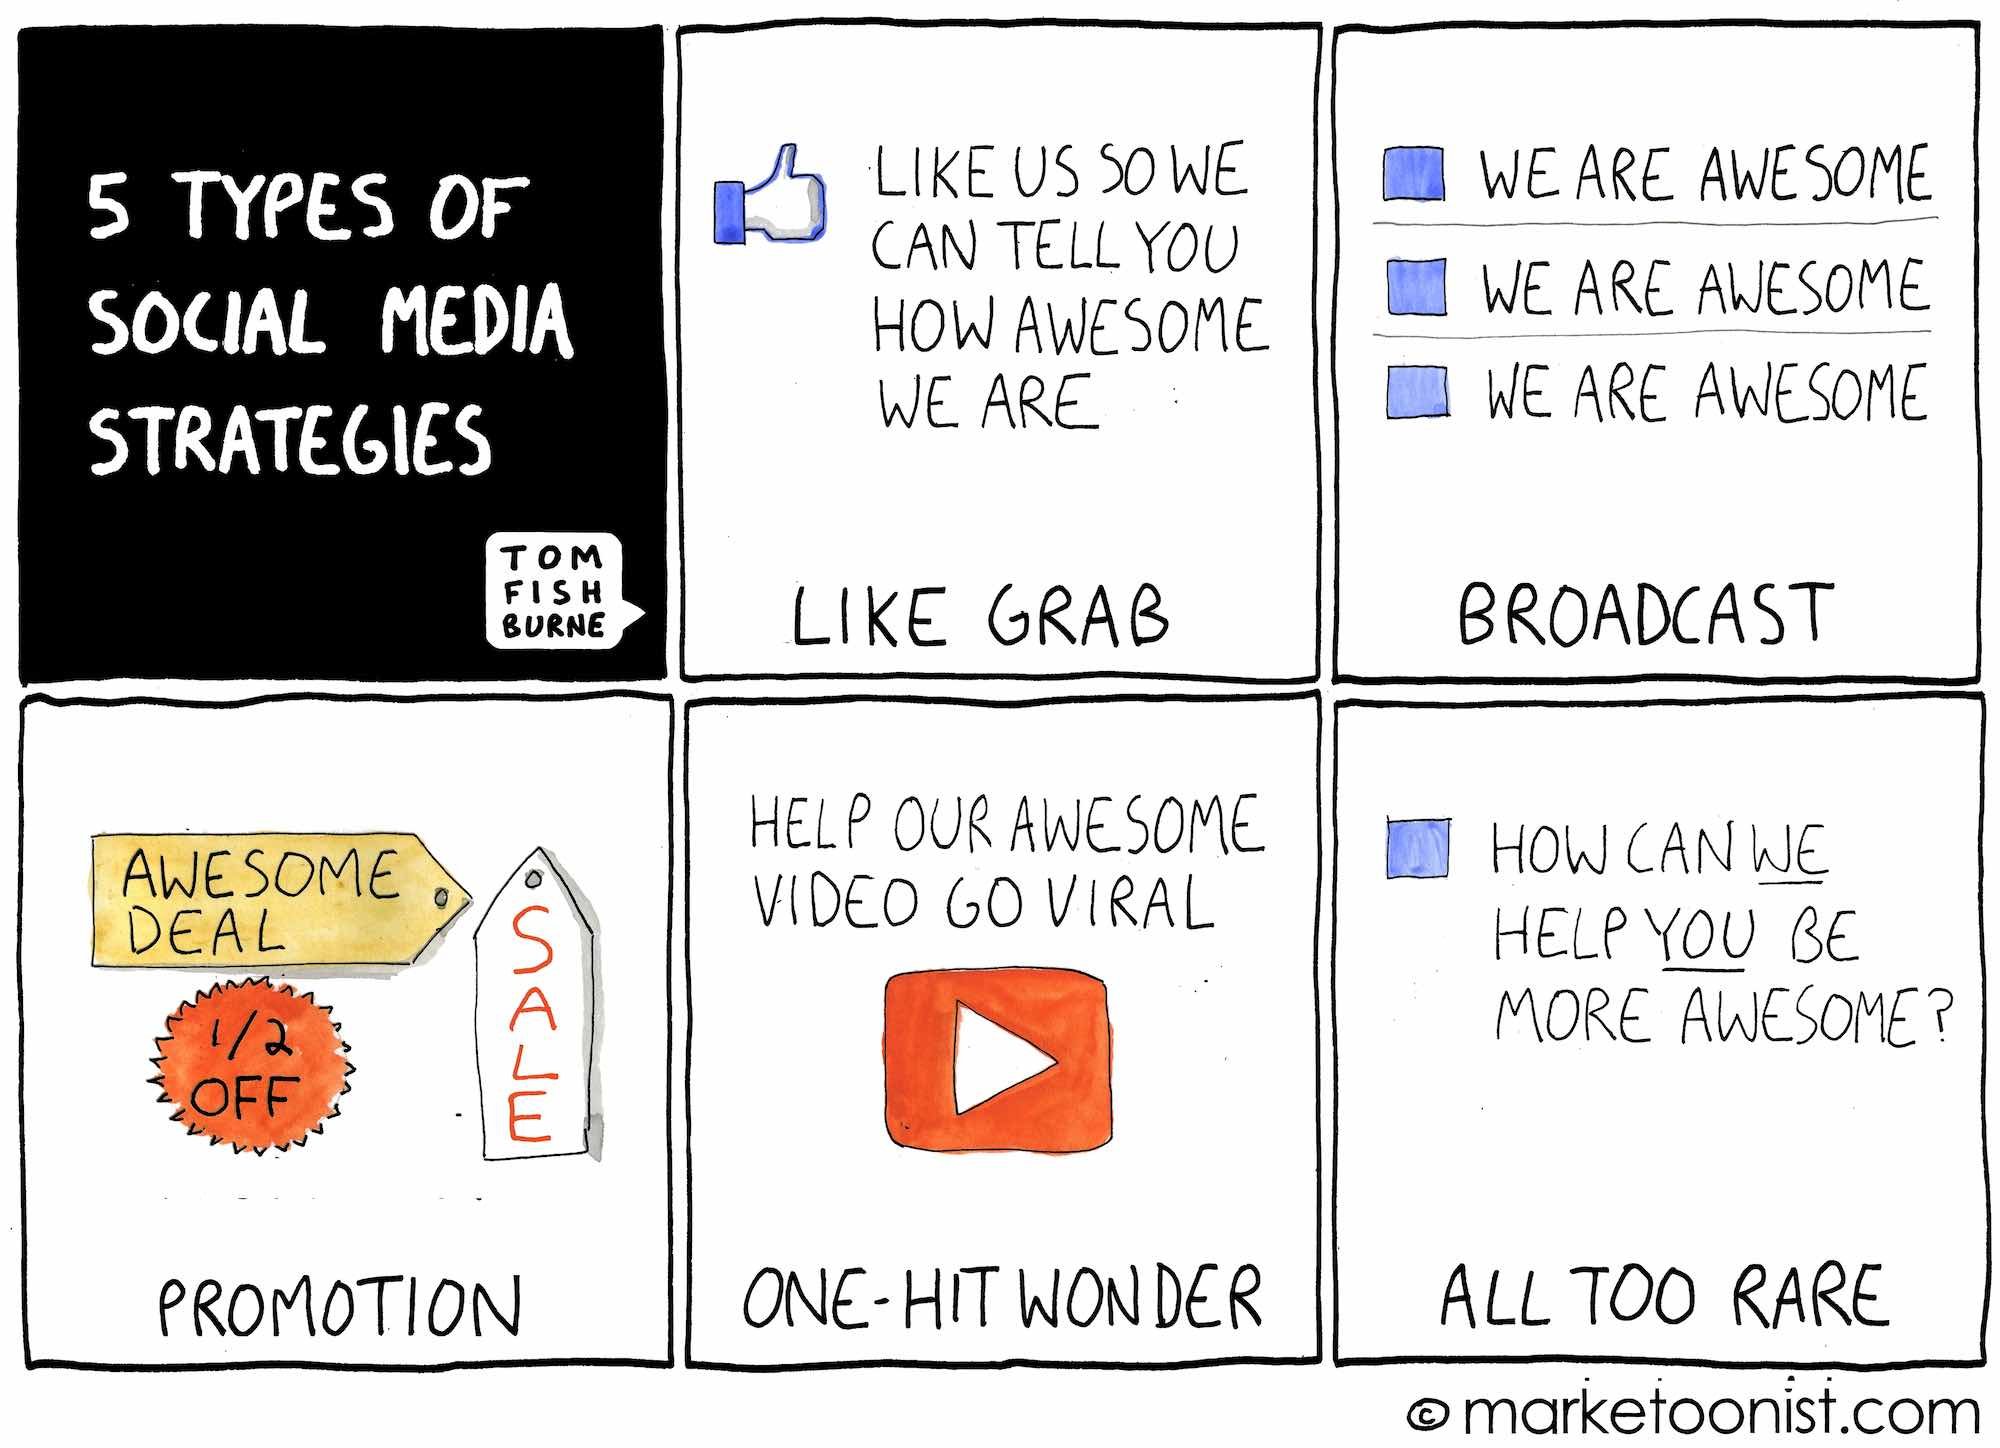 Tom Fishbourne’s cartoon on social media strategies that add value